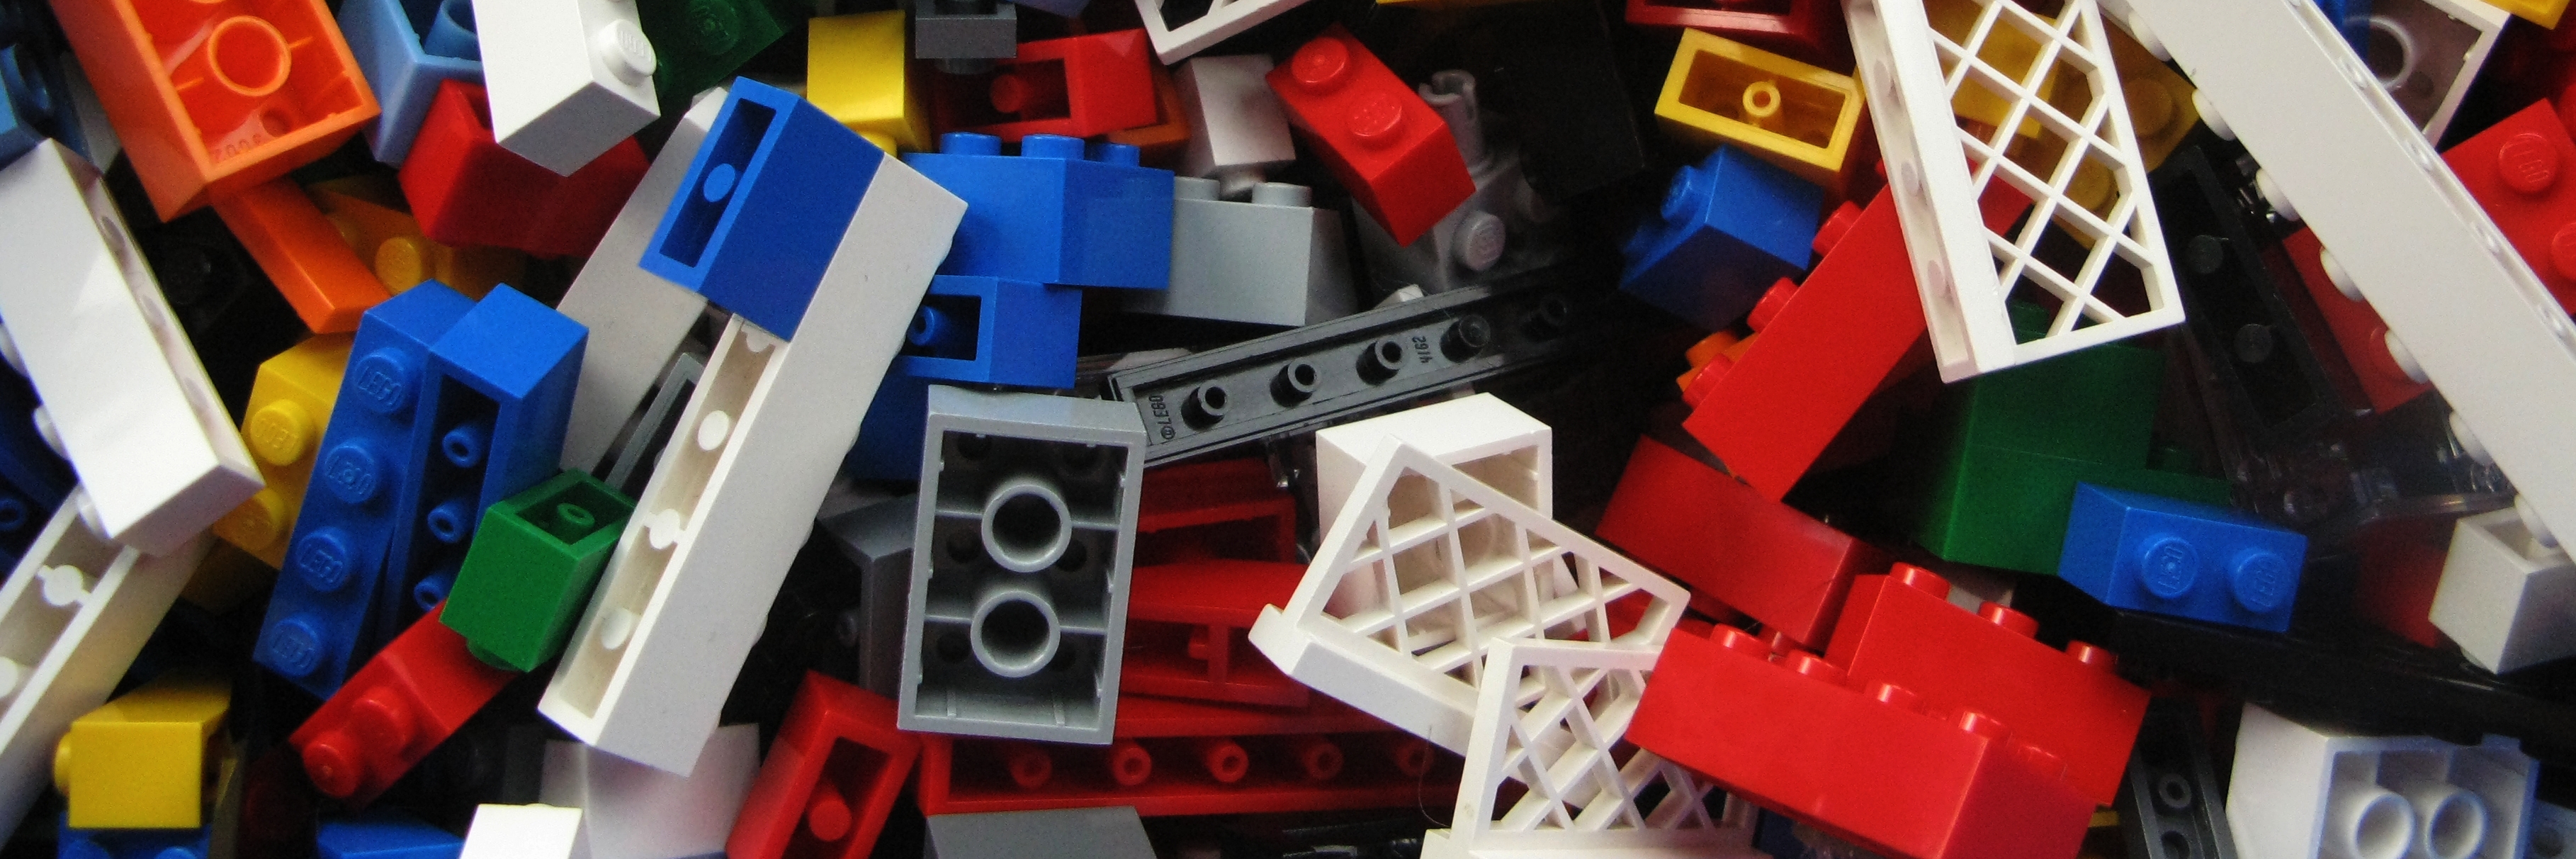 Tactile Memories of Lego